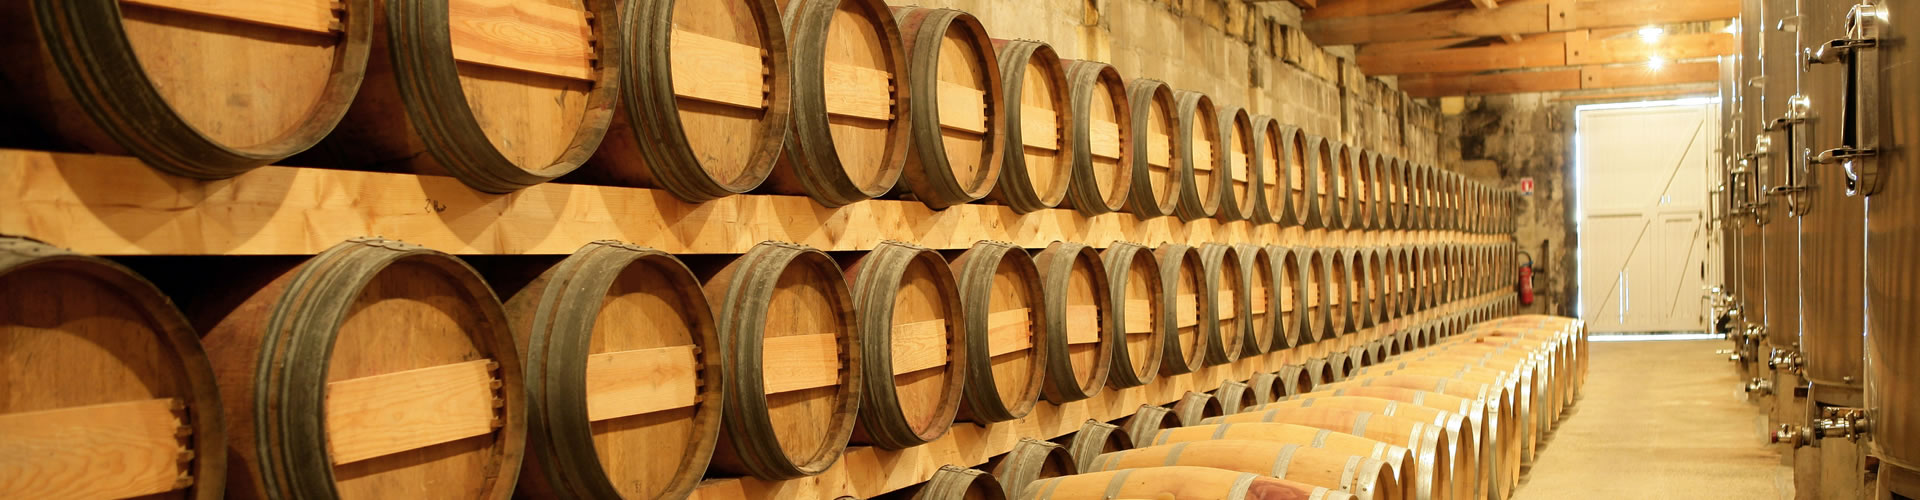 Wine barrels at a California winery